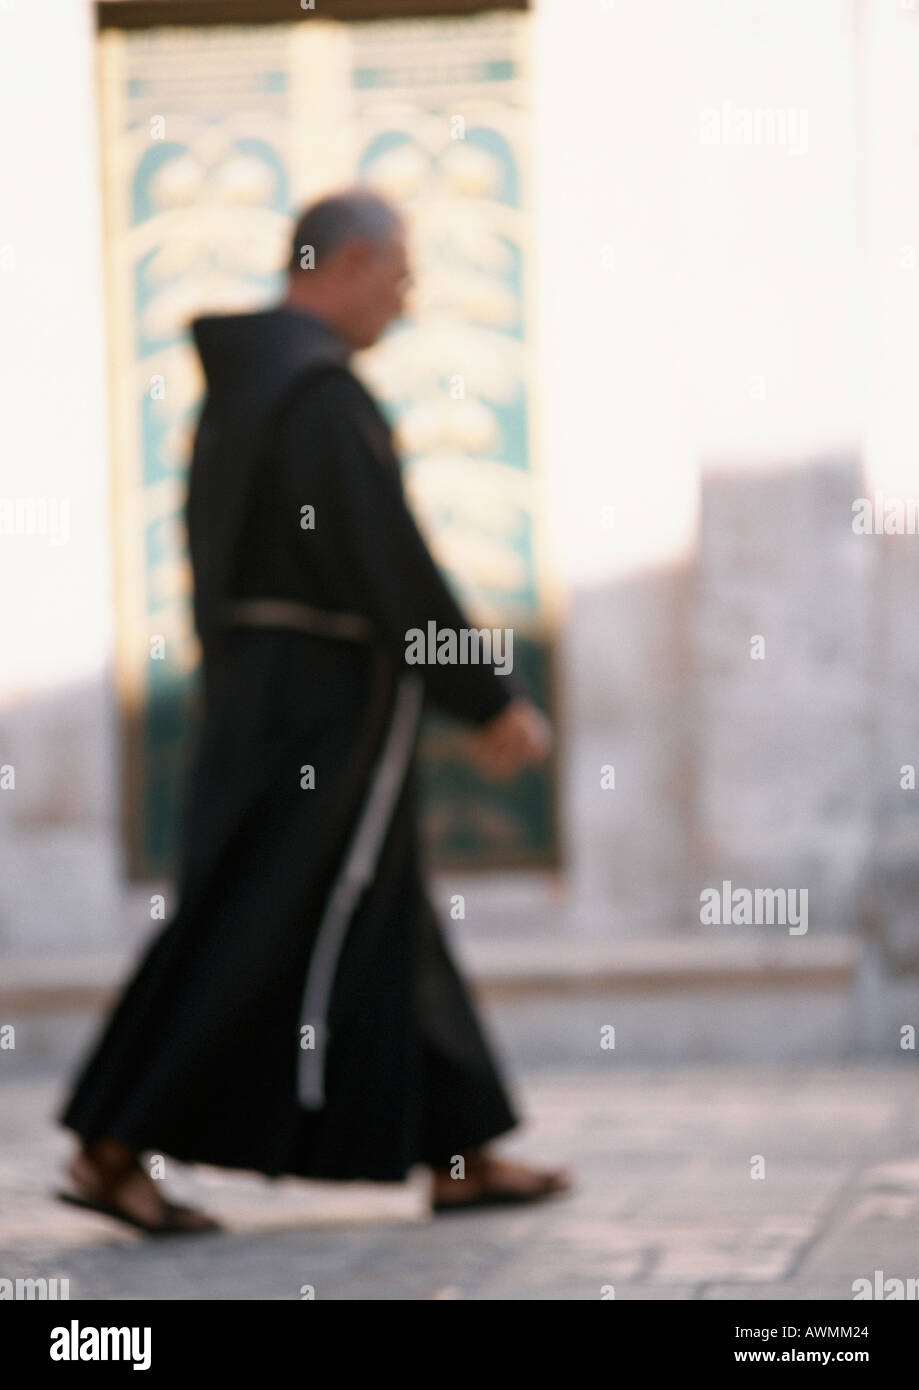 Israël, Jérusalem, moine, side view, blurred Banque D'Images